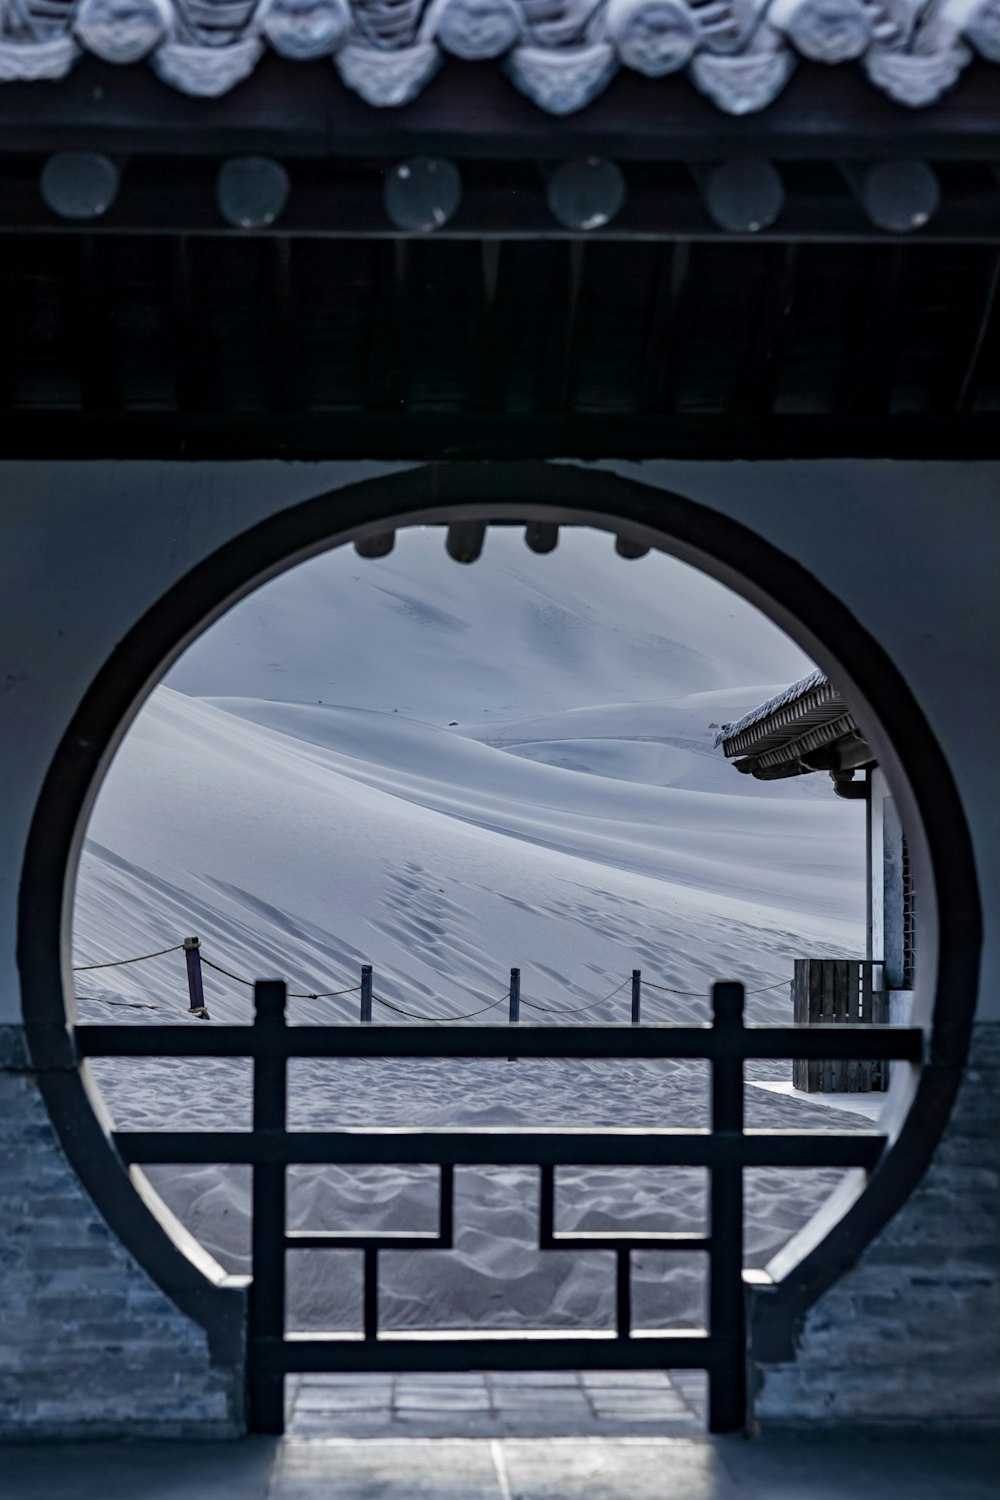 a view of a snowy landscape through a circular window